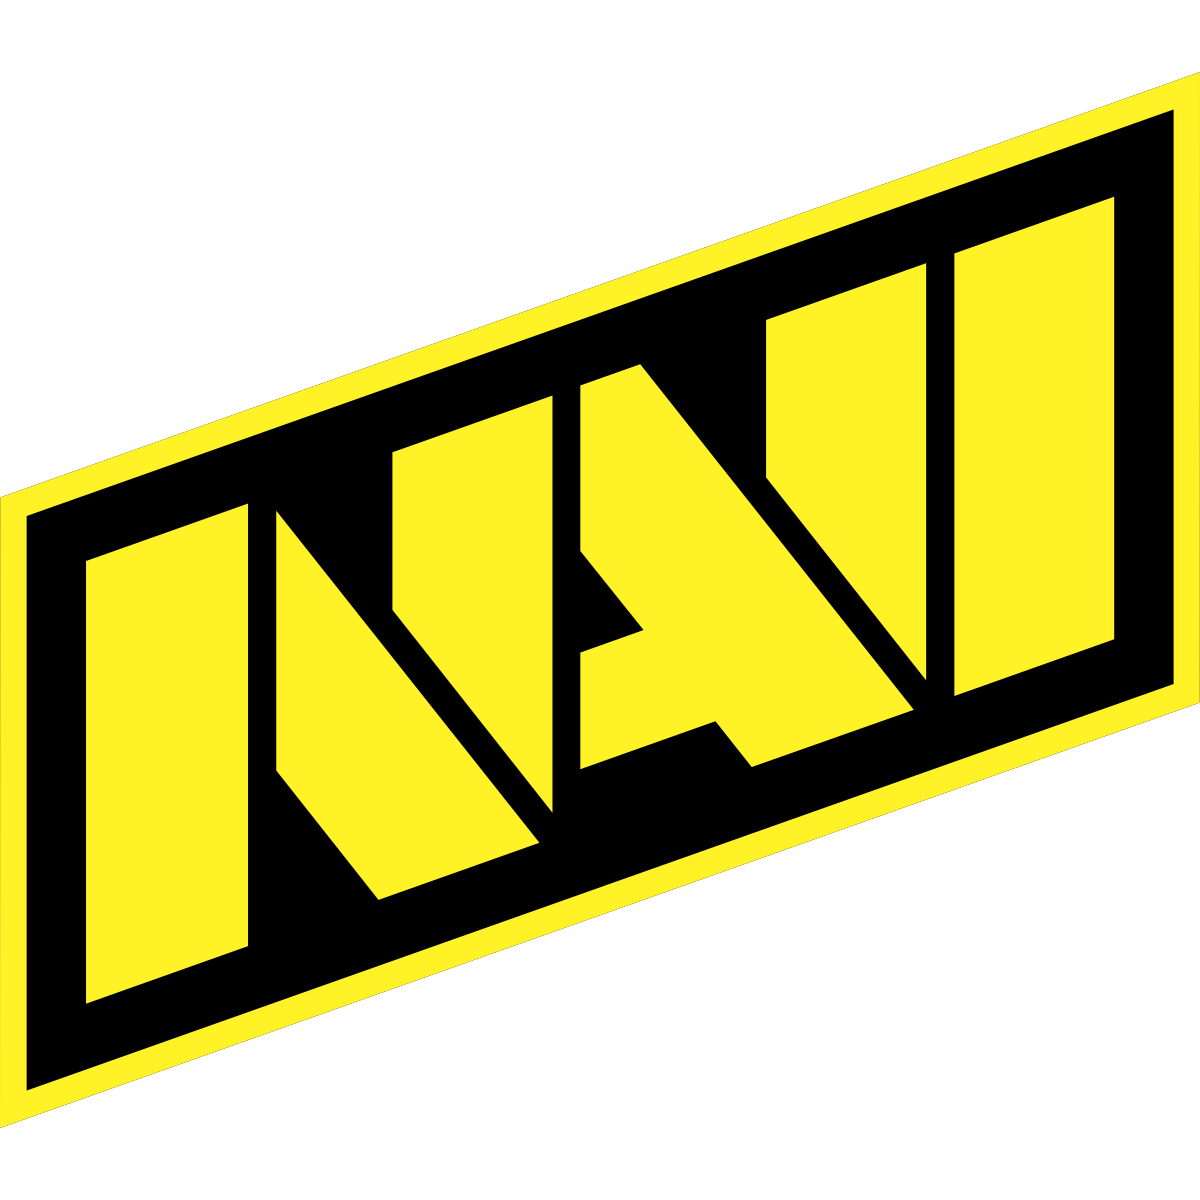 NaVi_new.png